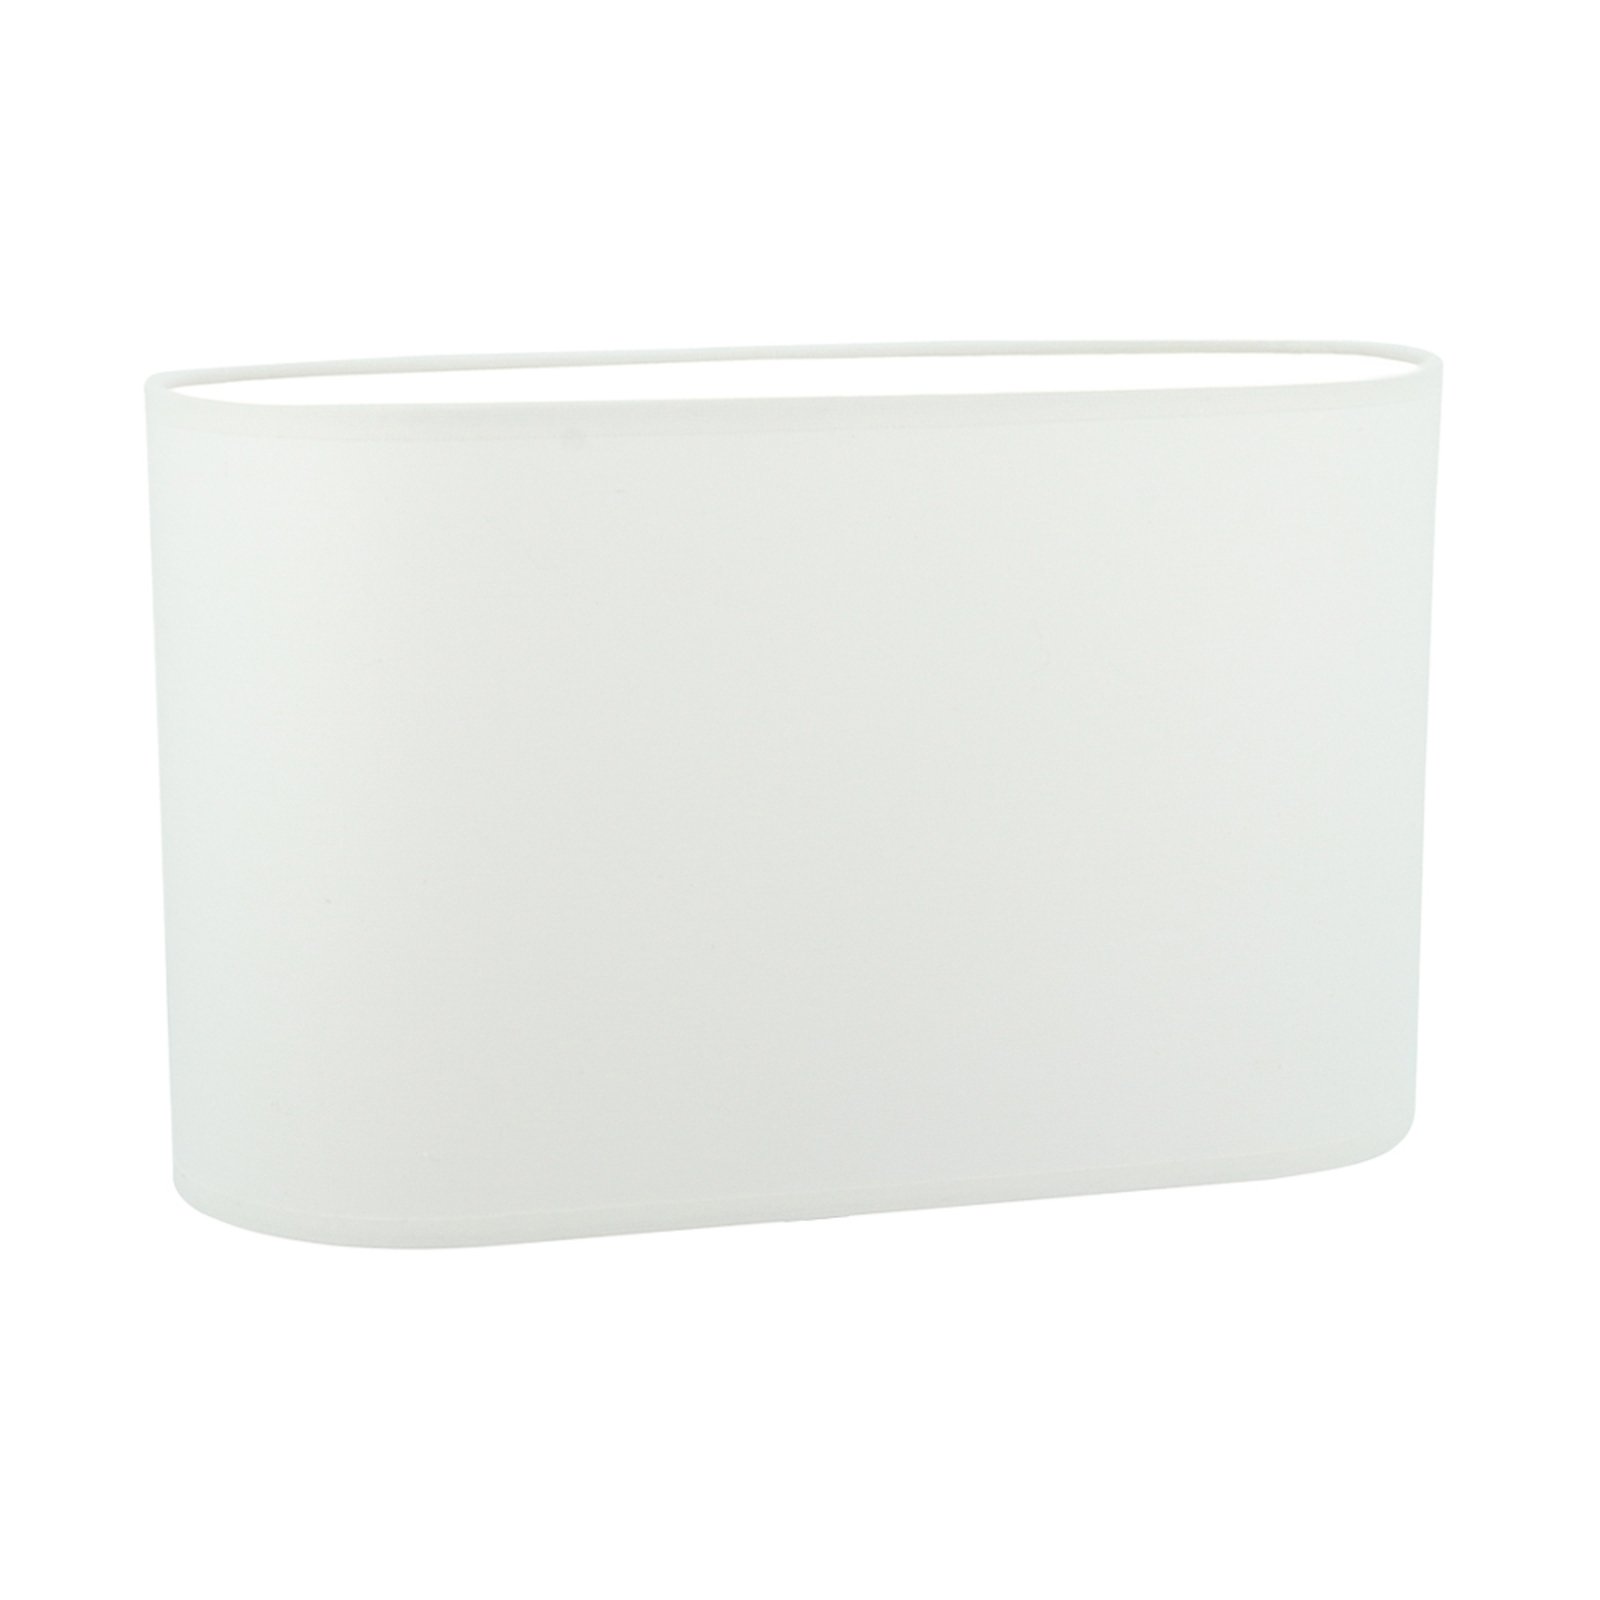 Cassy lampshade 27 x 10 x 18 cm white